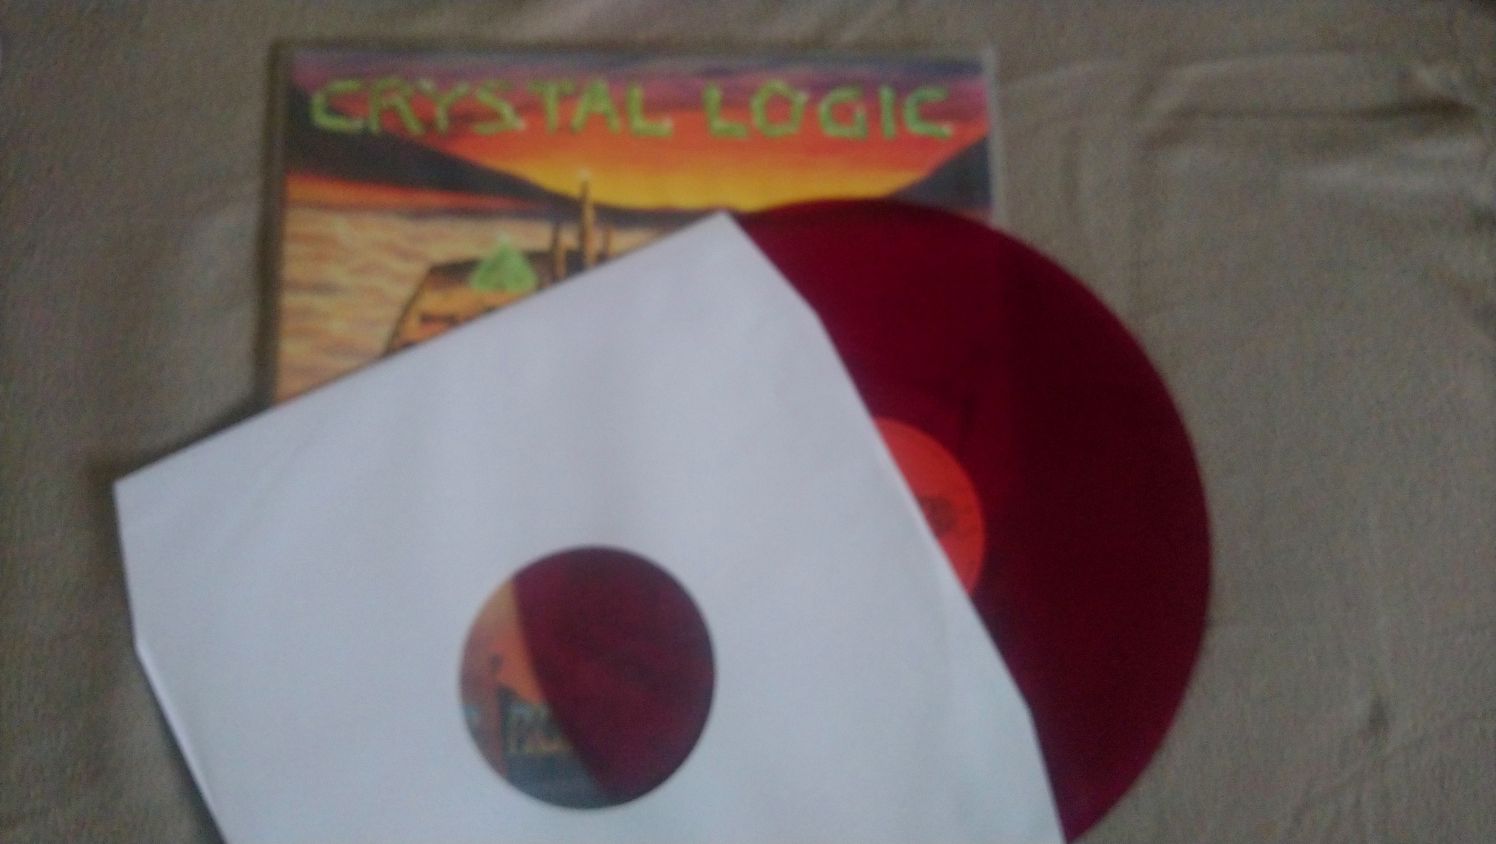 Manilla Road Crystal Logic LP wiśniowy